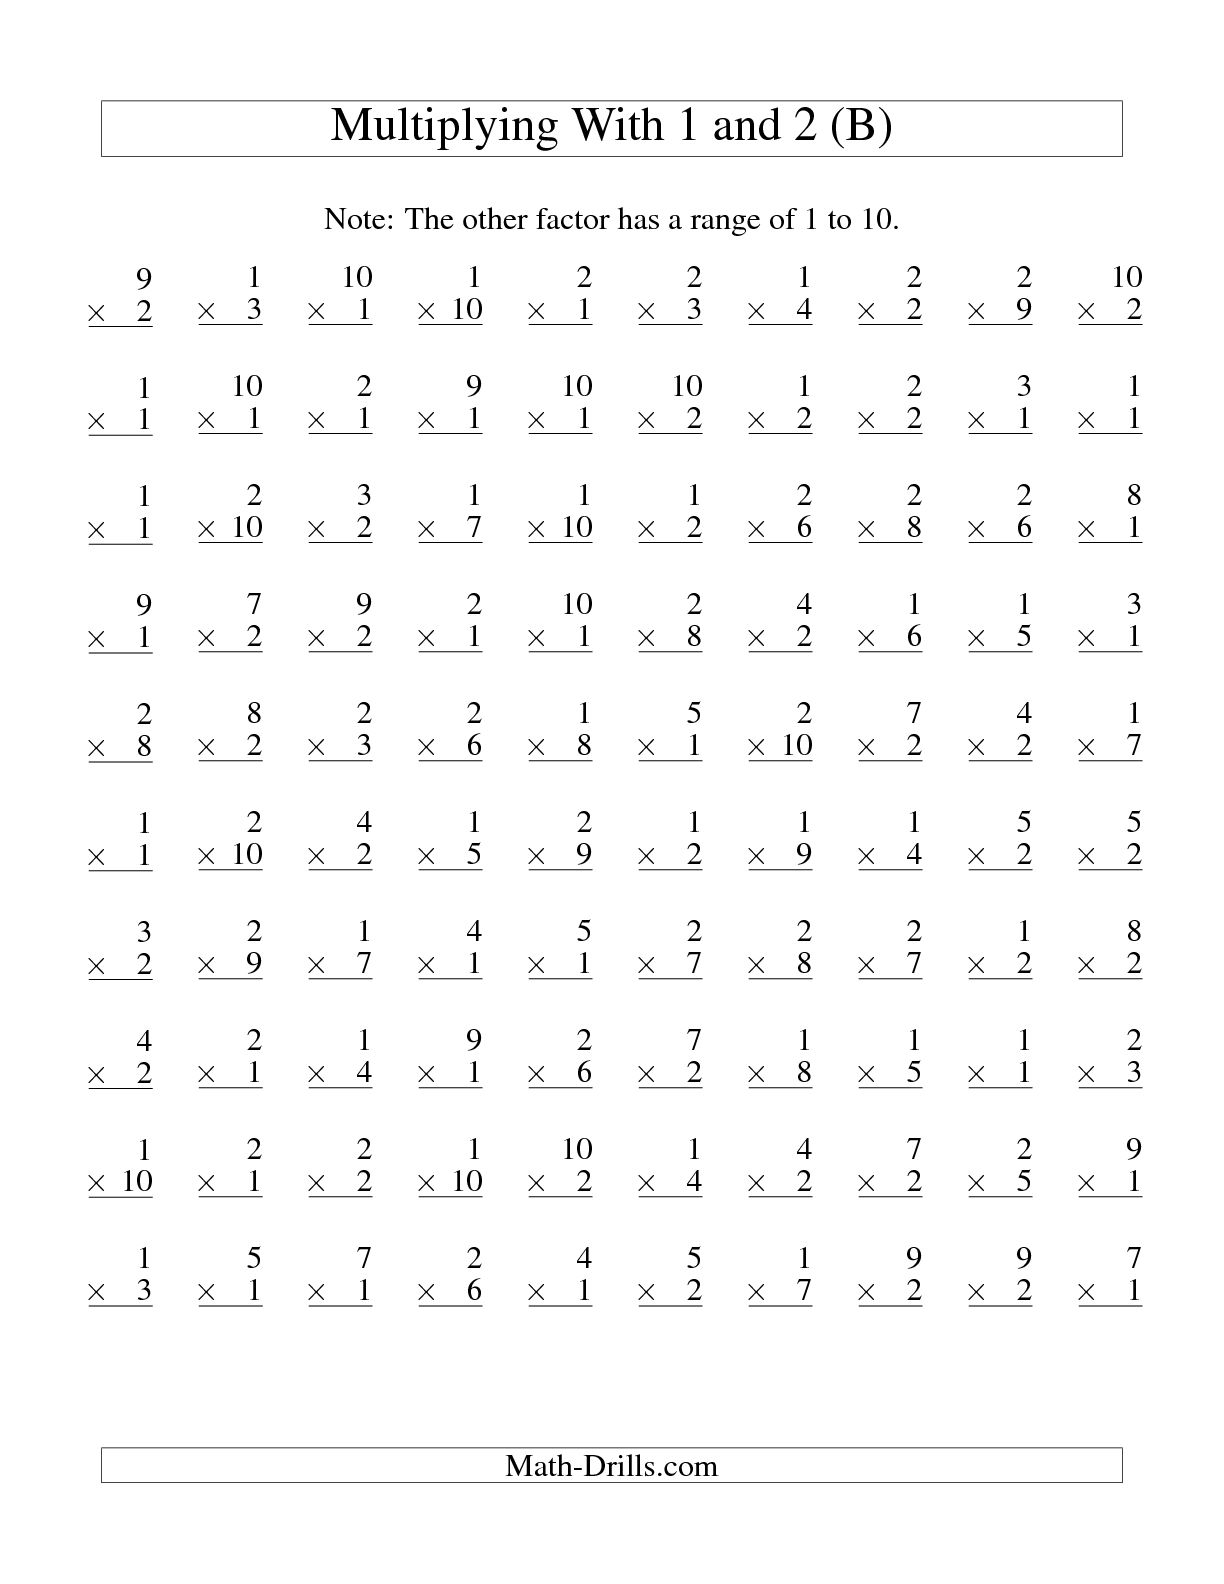 100 Multiplication Facts Worksheet Printable Image